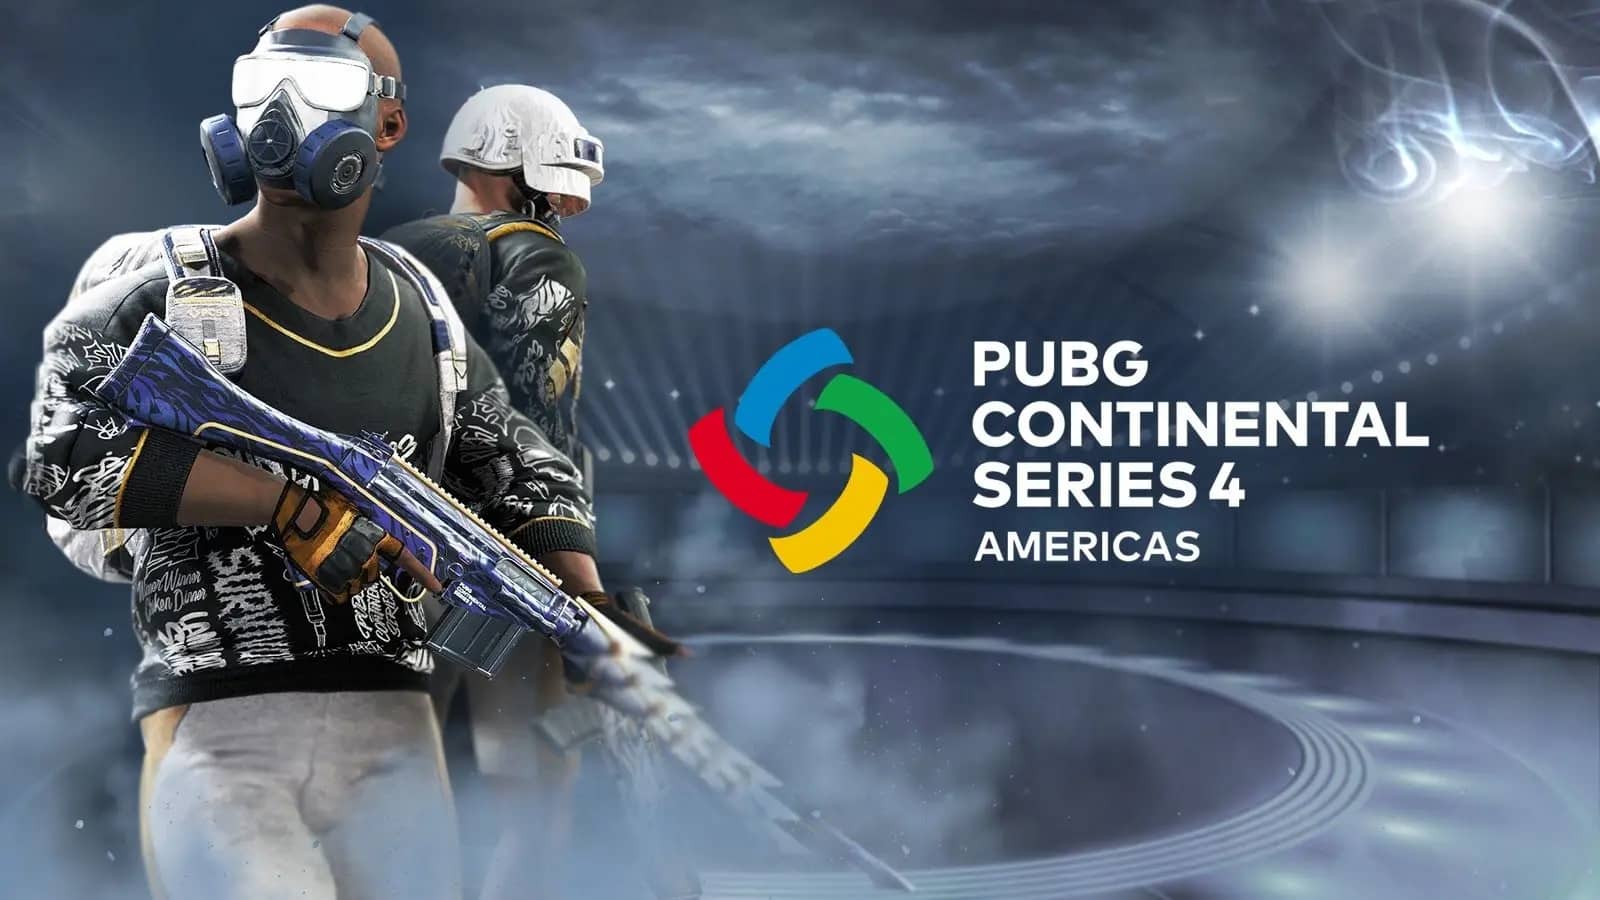 PUBG Continental Series 4 Americas